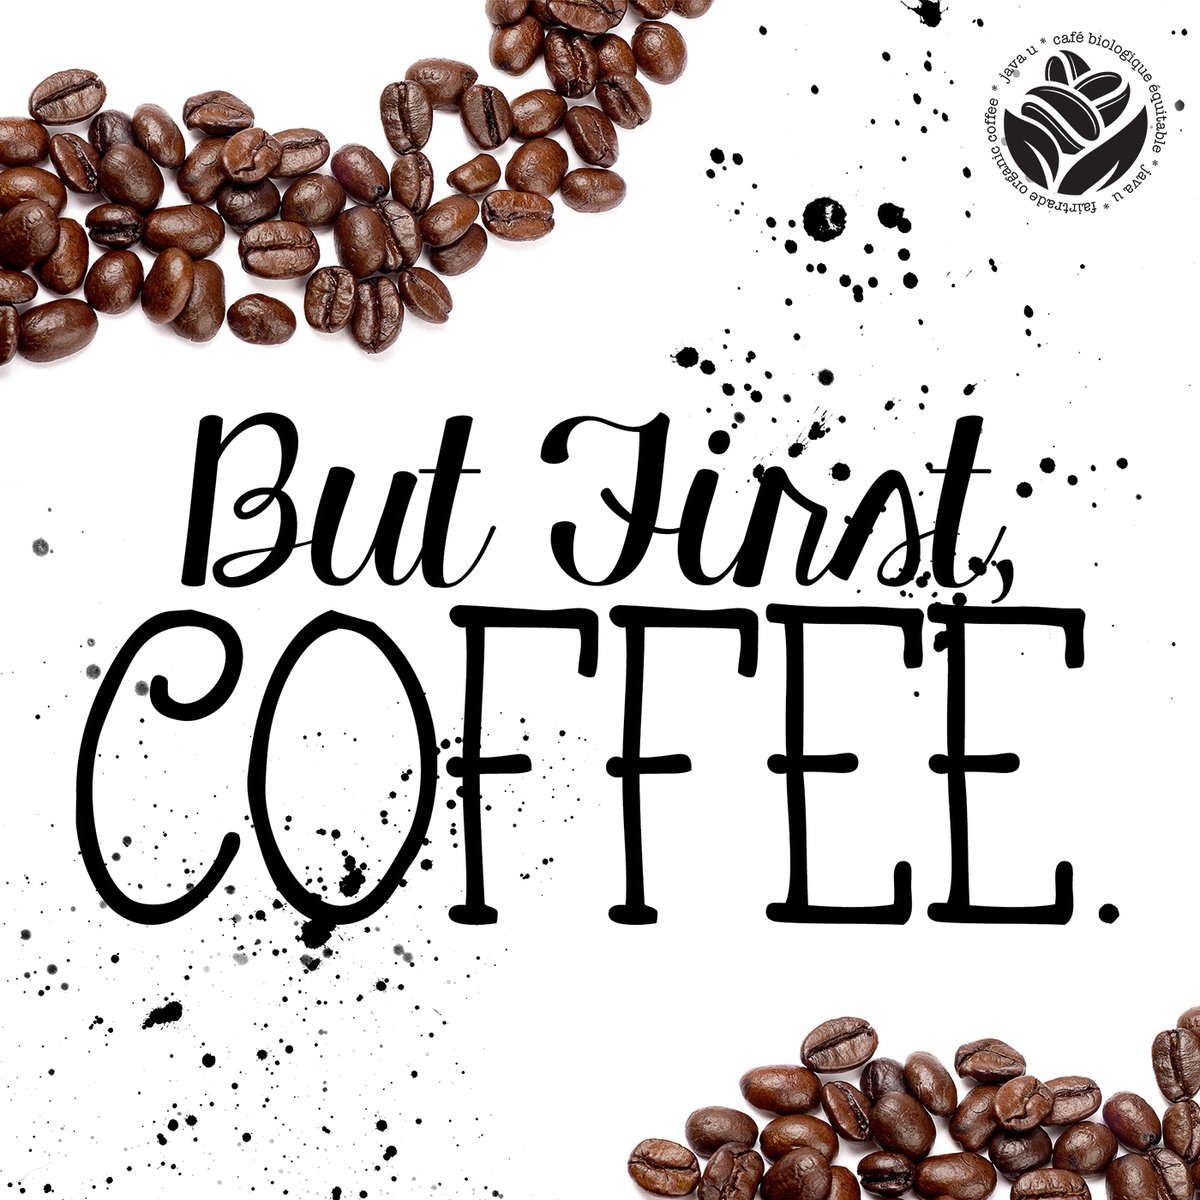 Juste un rappel! ☝️☕️

Just a reminder! ☝️☕️

#javau #fairtradeorganic #montreal #coffee #cafe #mtlcafe #fresh #coffeeshop #coffehouse #coffeetime #coffeeaddict